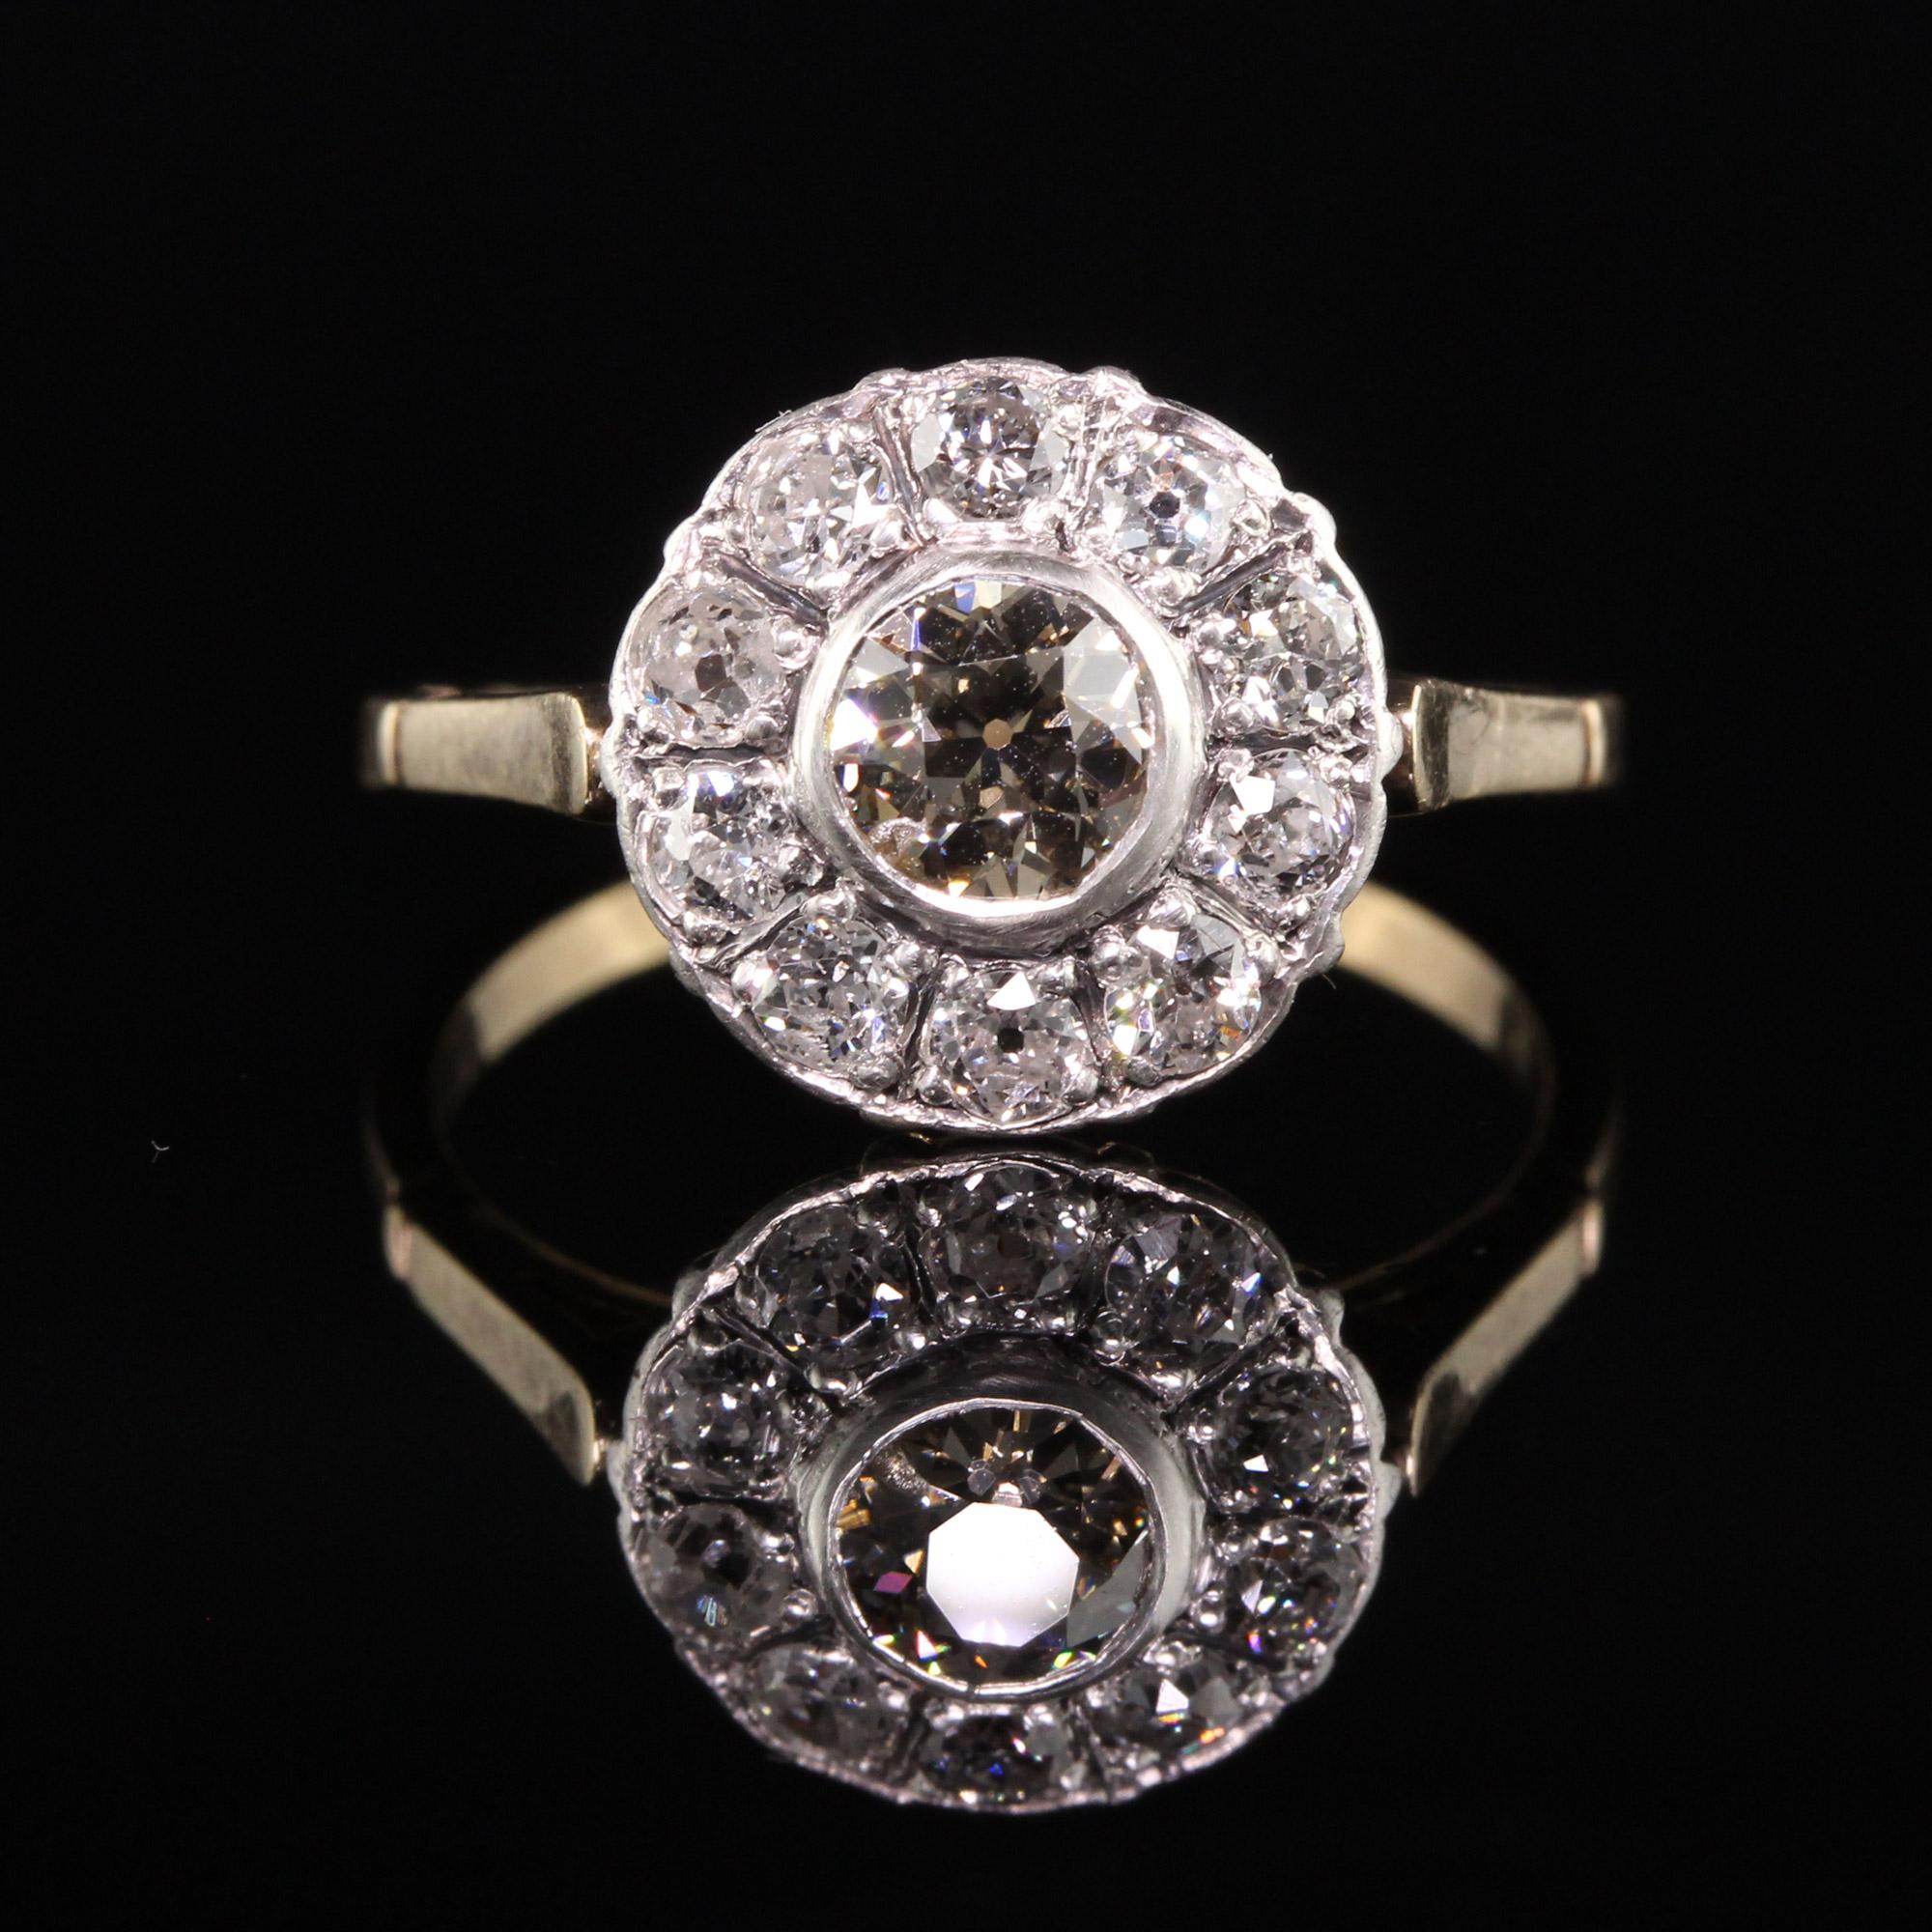 14k white gold art deco halo diamond engagement ring